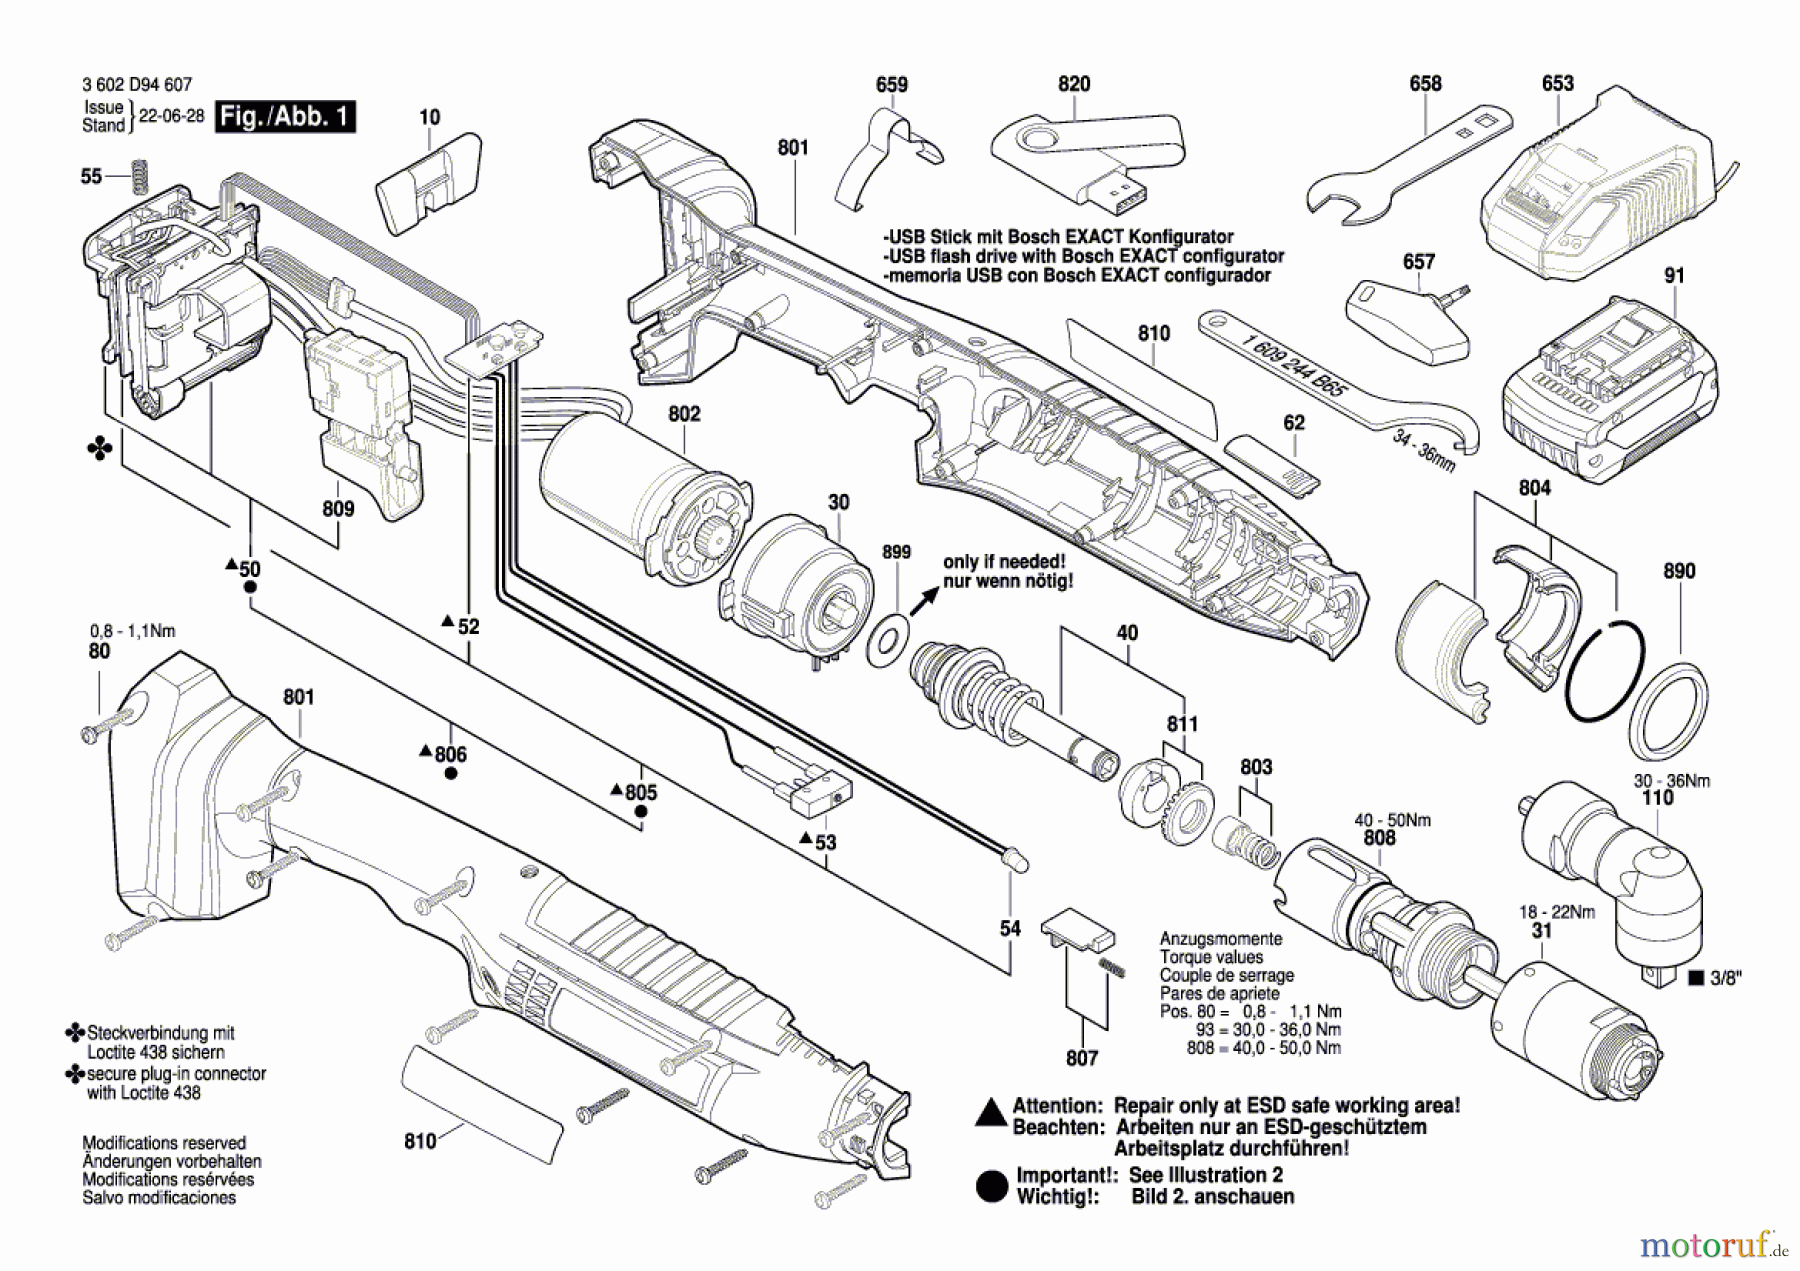  Bosch Akku Werkzeug Iw-Akku-Schrauber ANGLE EXACT ION 30-290 Seite 1